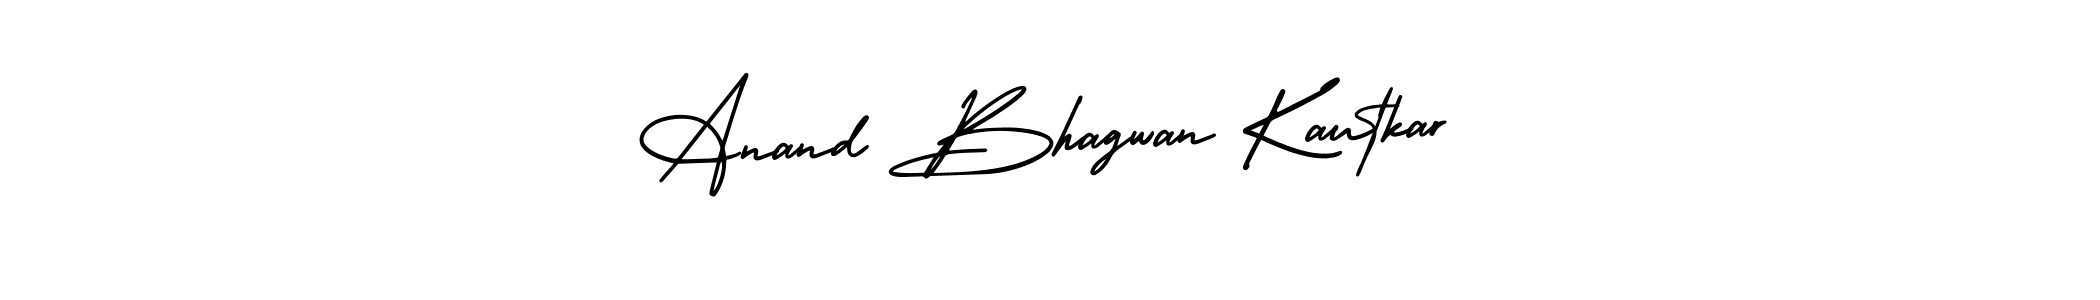 Best and Professional Signature Style for Anand Bhagwan Kautkar. AmerikaSignatureDemo-Regular Best Signature Style Collection. Anand Bhagwan Kautkar signature style 3 images and pictures png